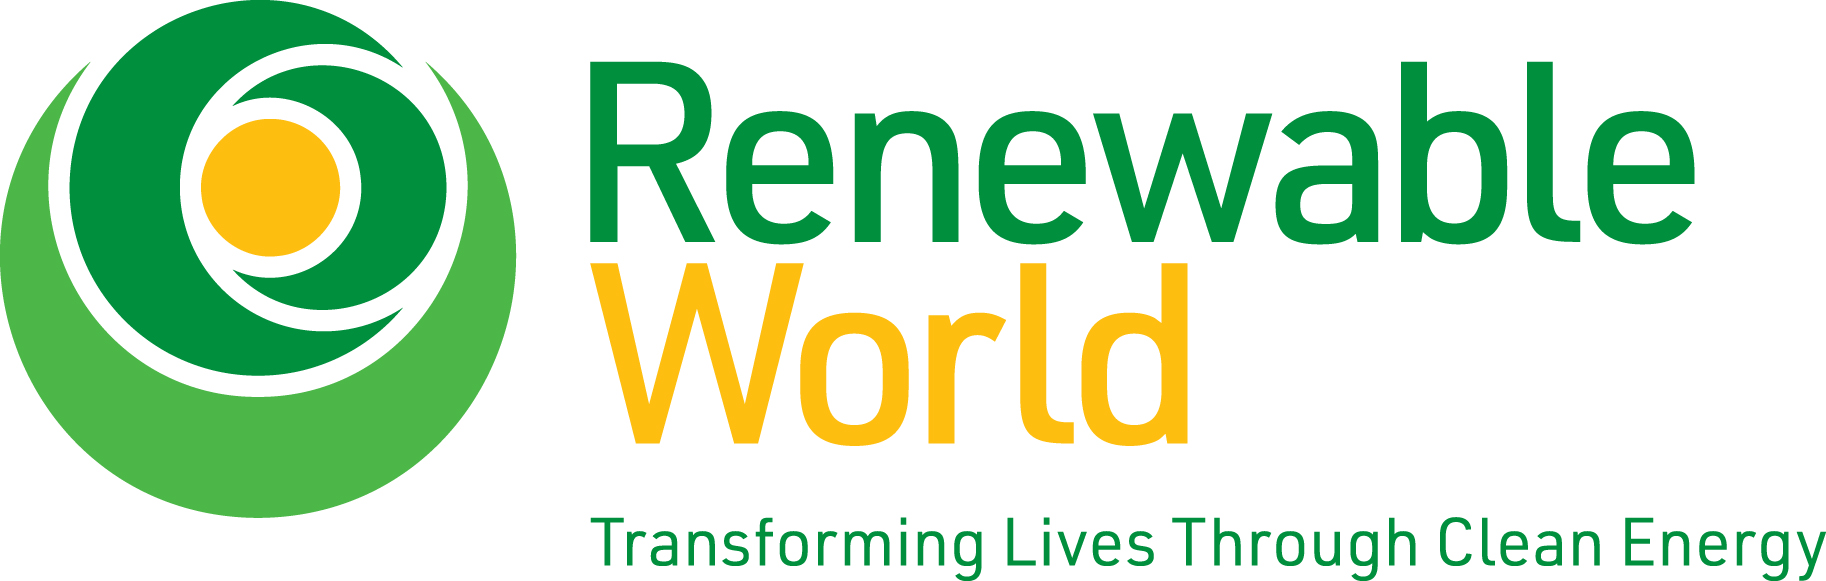 Renewable World (GBP)